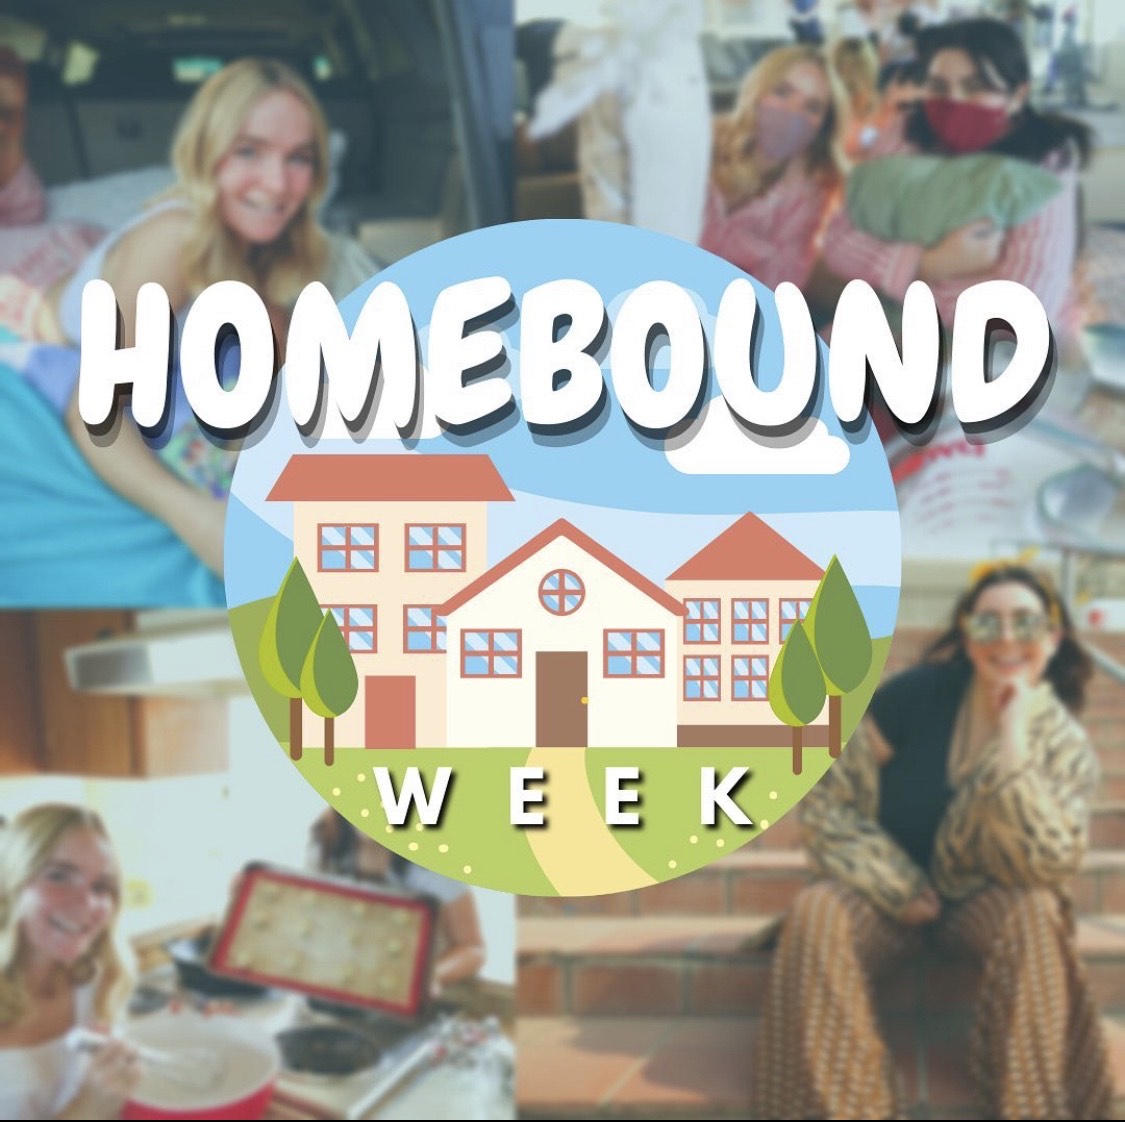 SLOHS ASB Hosts Homebound Week this week instead of traditional Homecoming Week